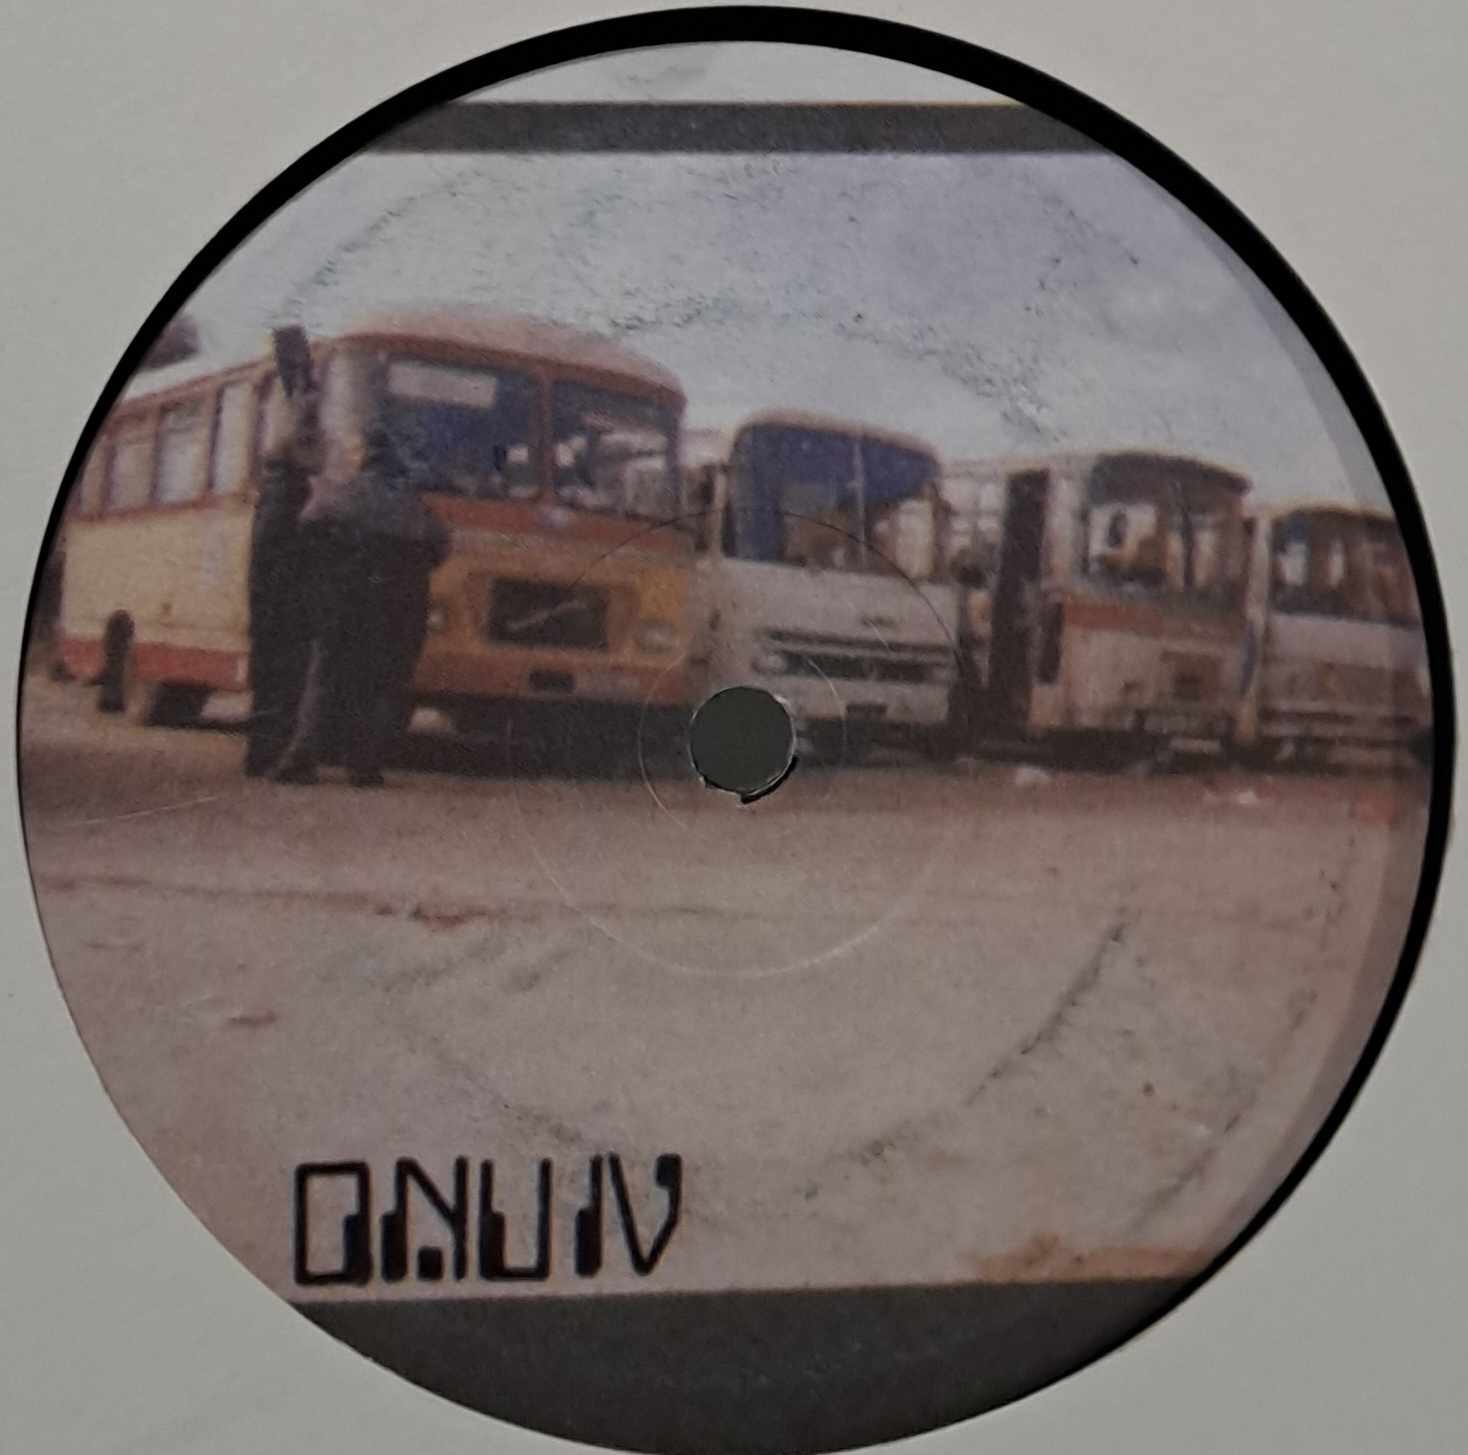 O.N.U. Records 04 - vinyle breakcore